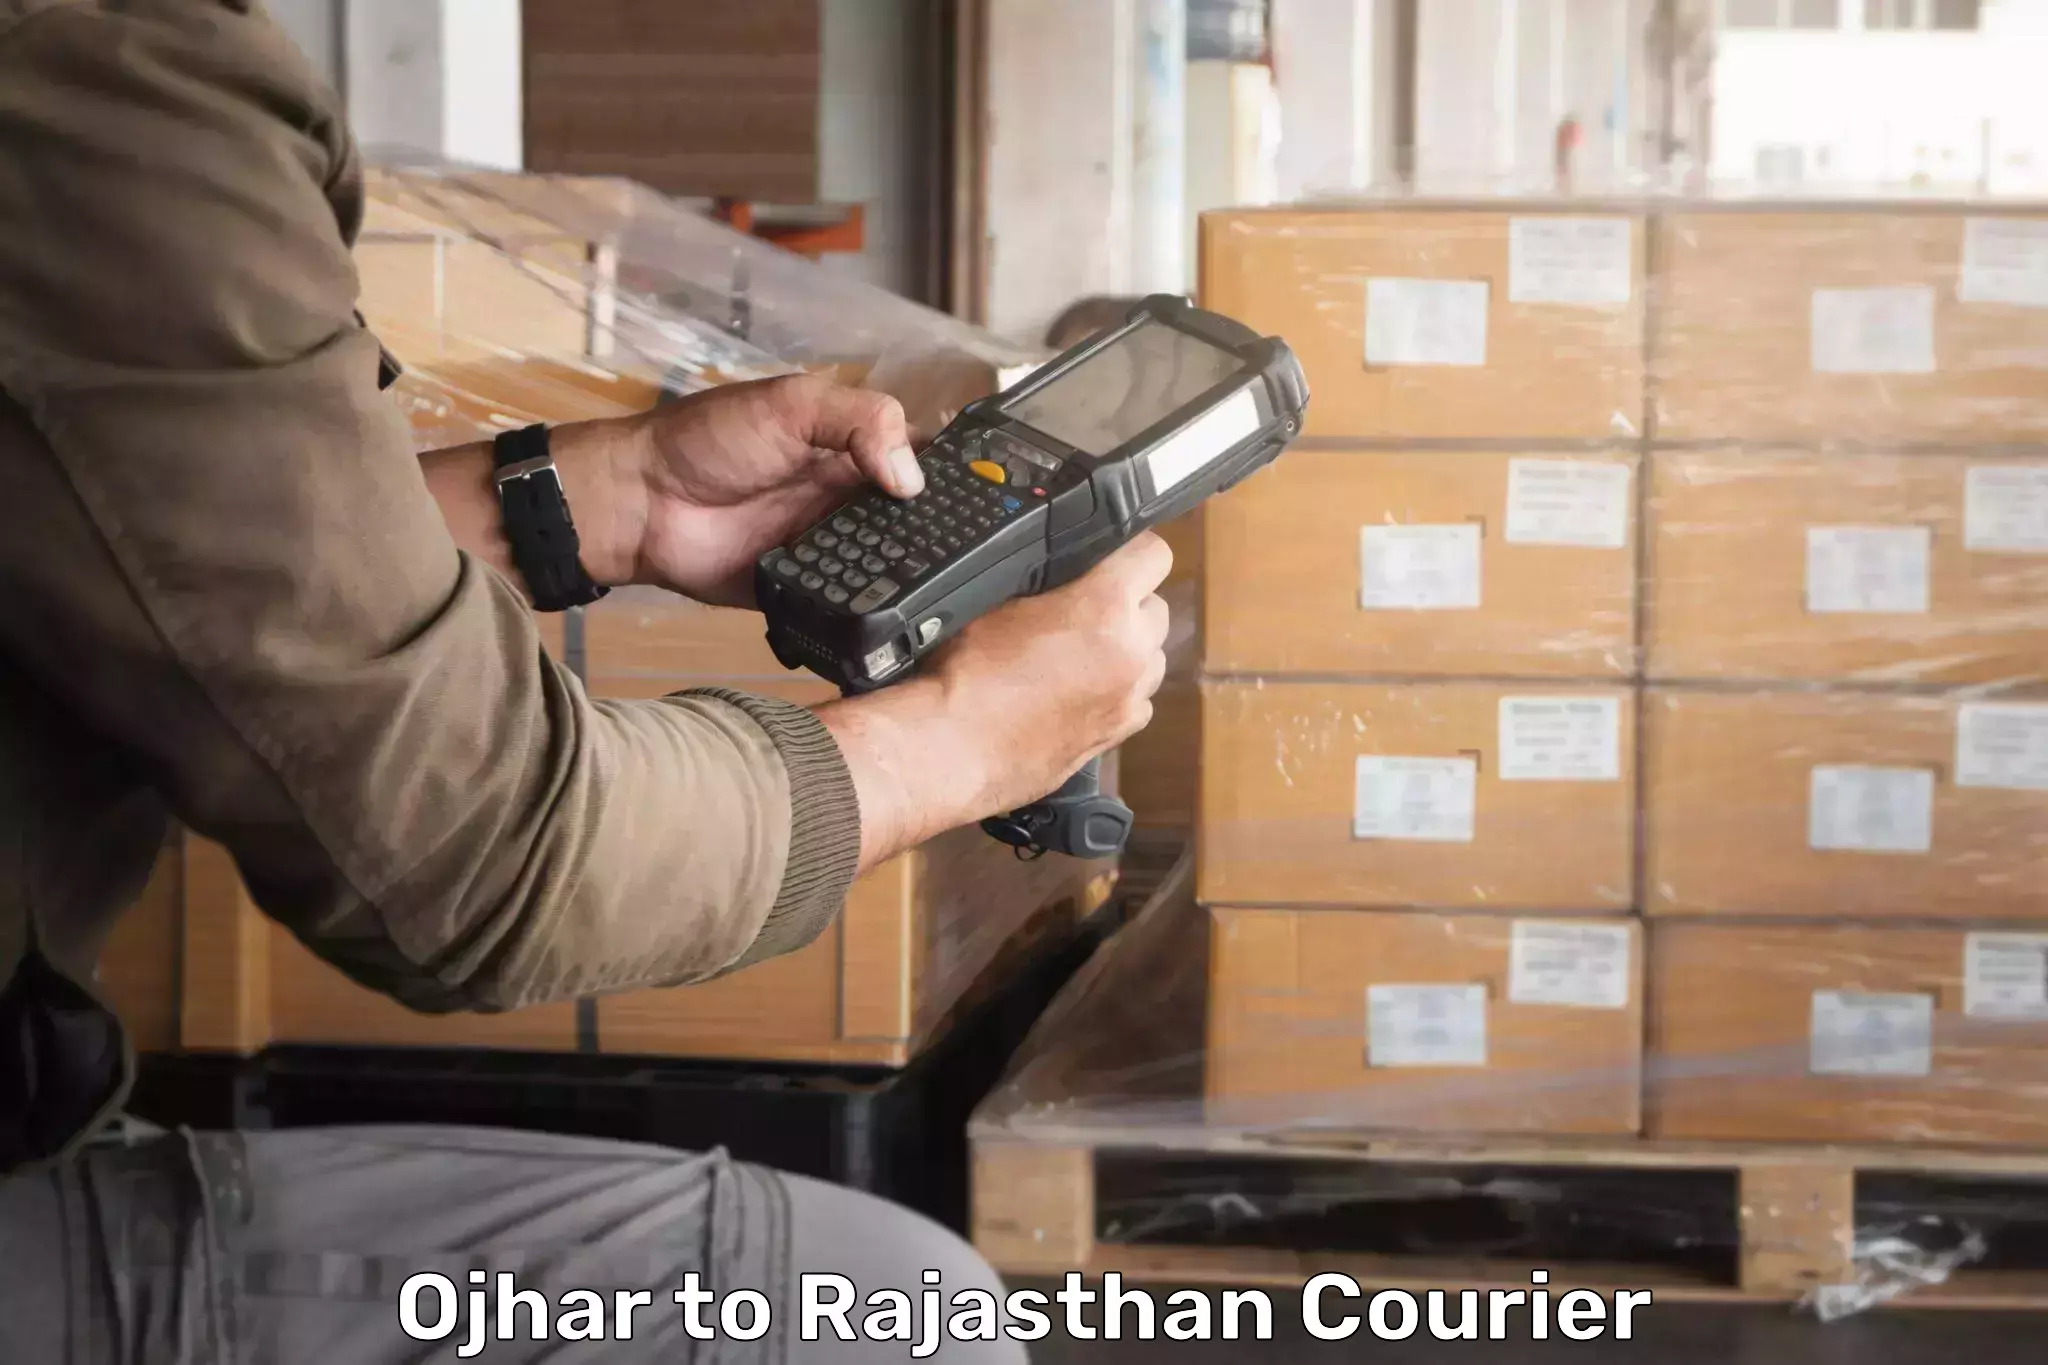 Global courier networks Ojhar to Sawai Madhopur